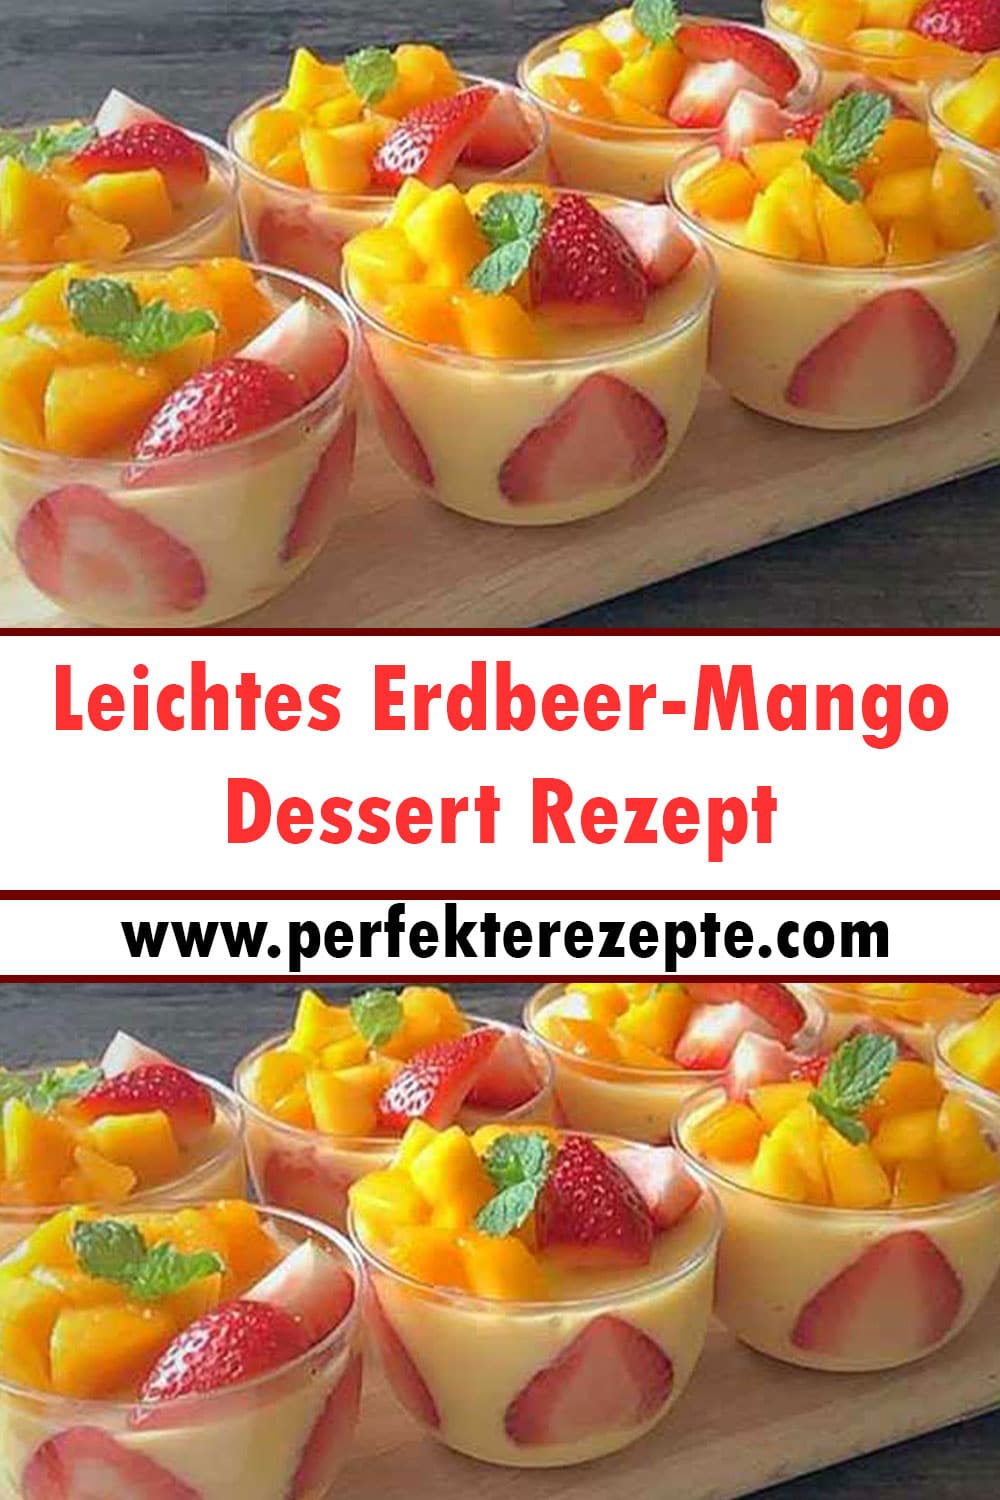 Leichtes Erdbeer-Mango Dessert Rezept